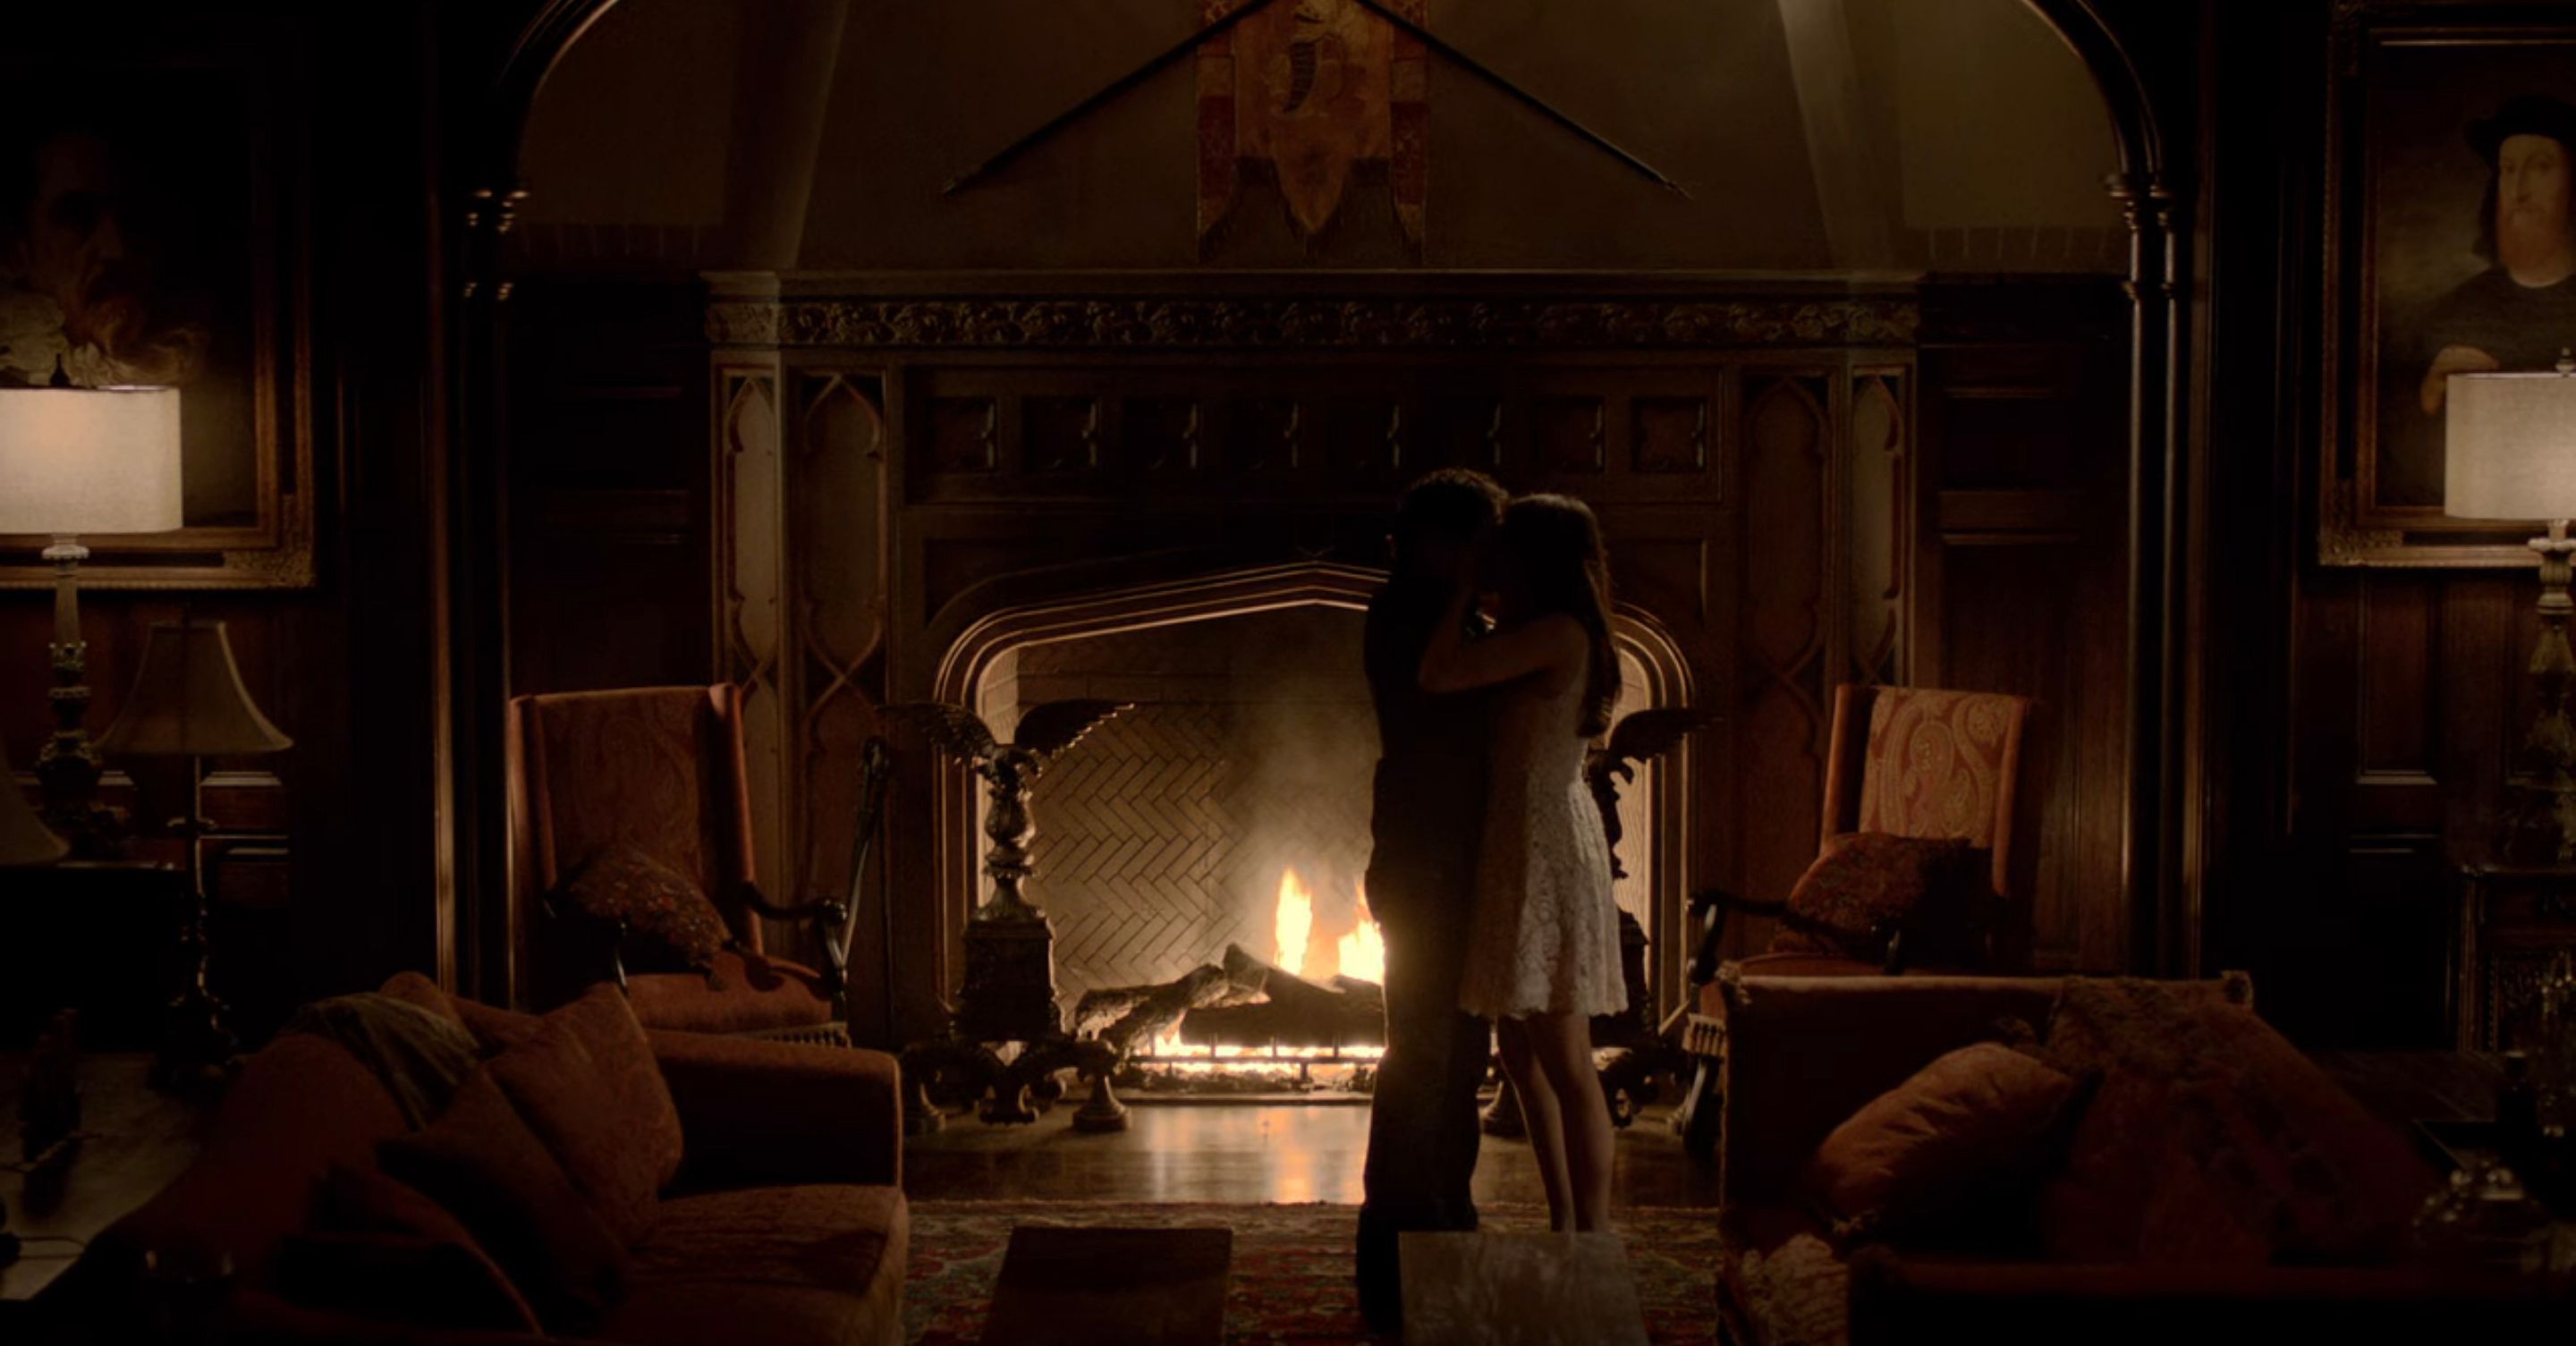 Damon and Elena kiss in The Vampire Diaries.